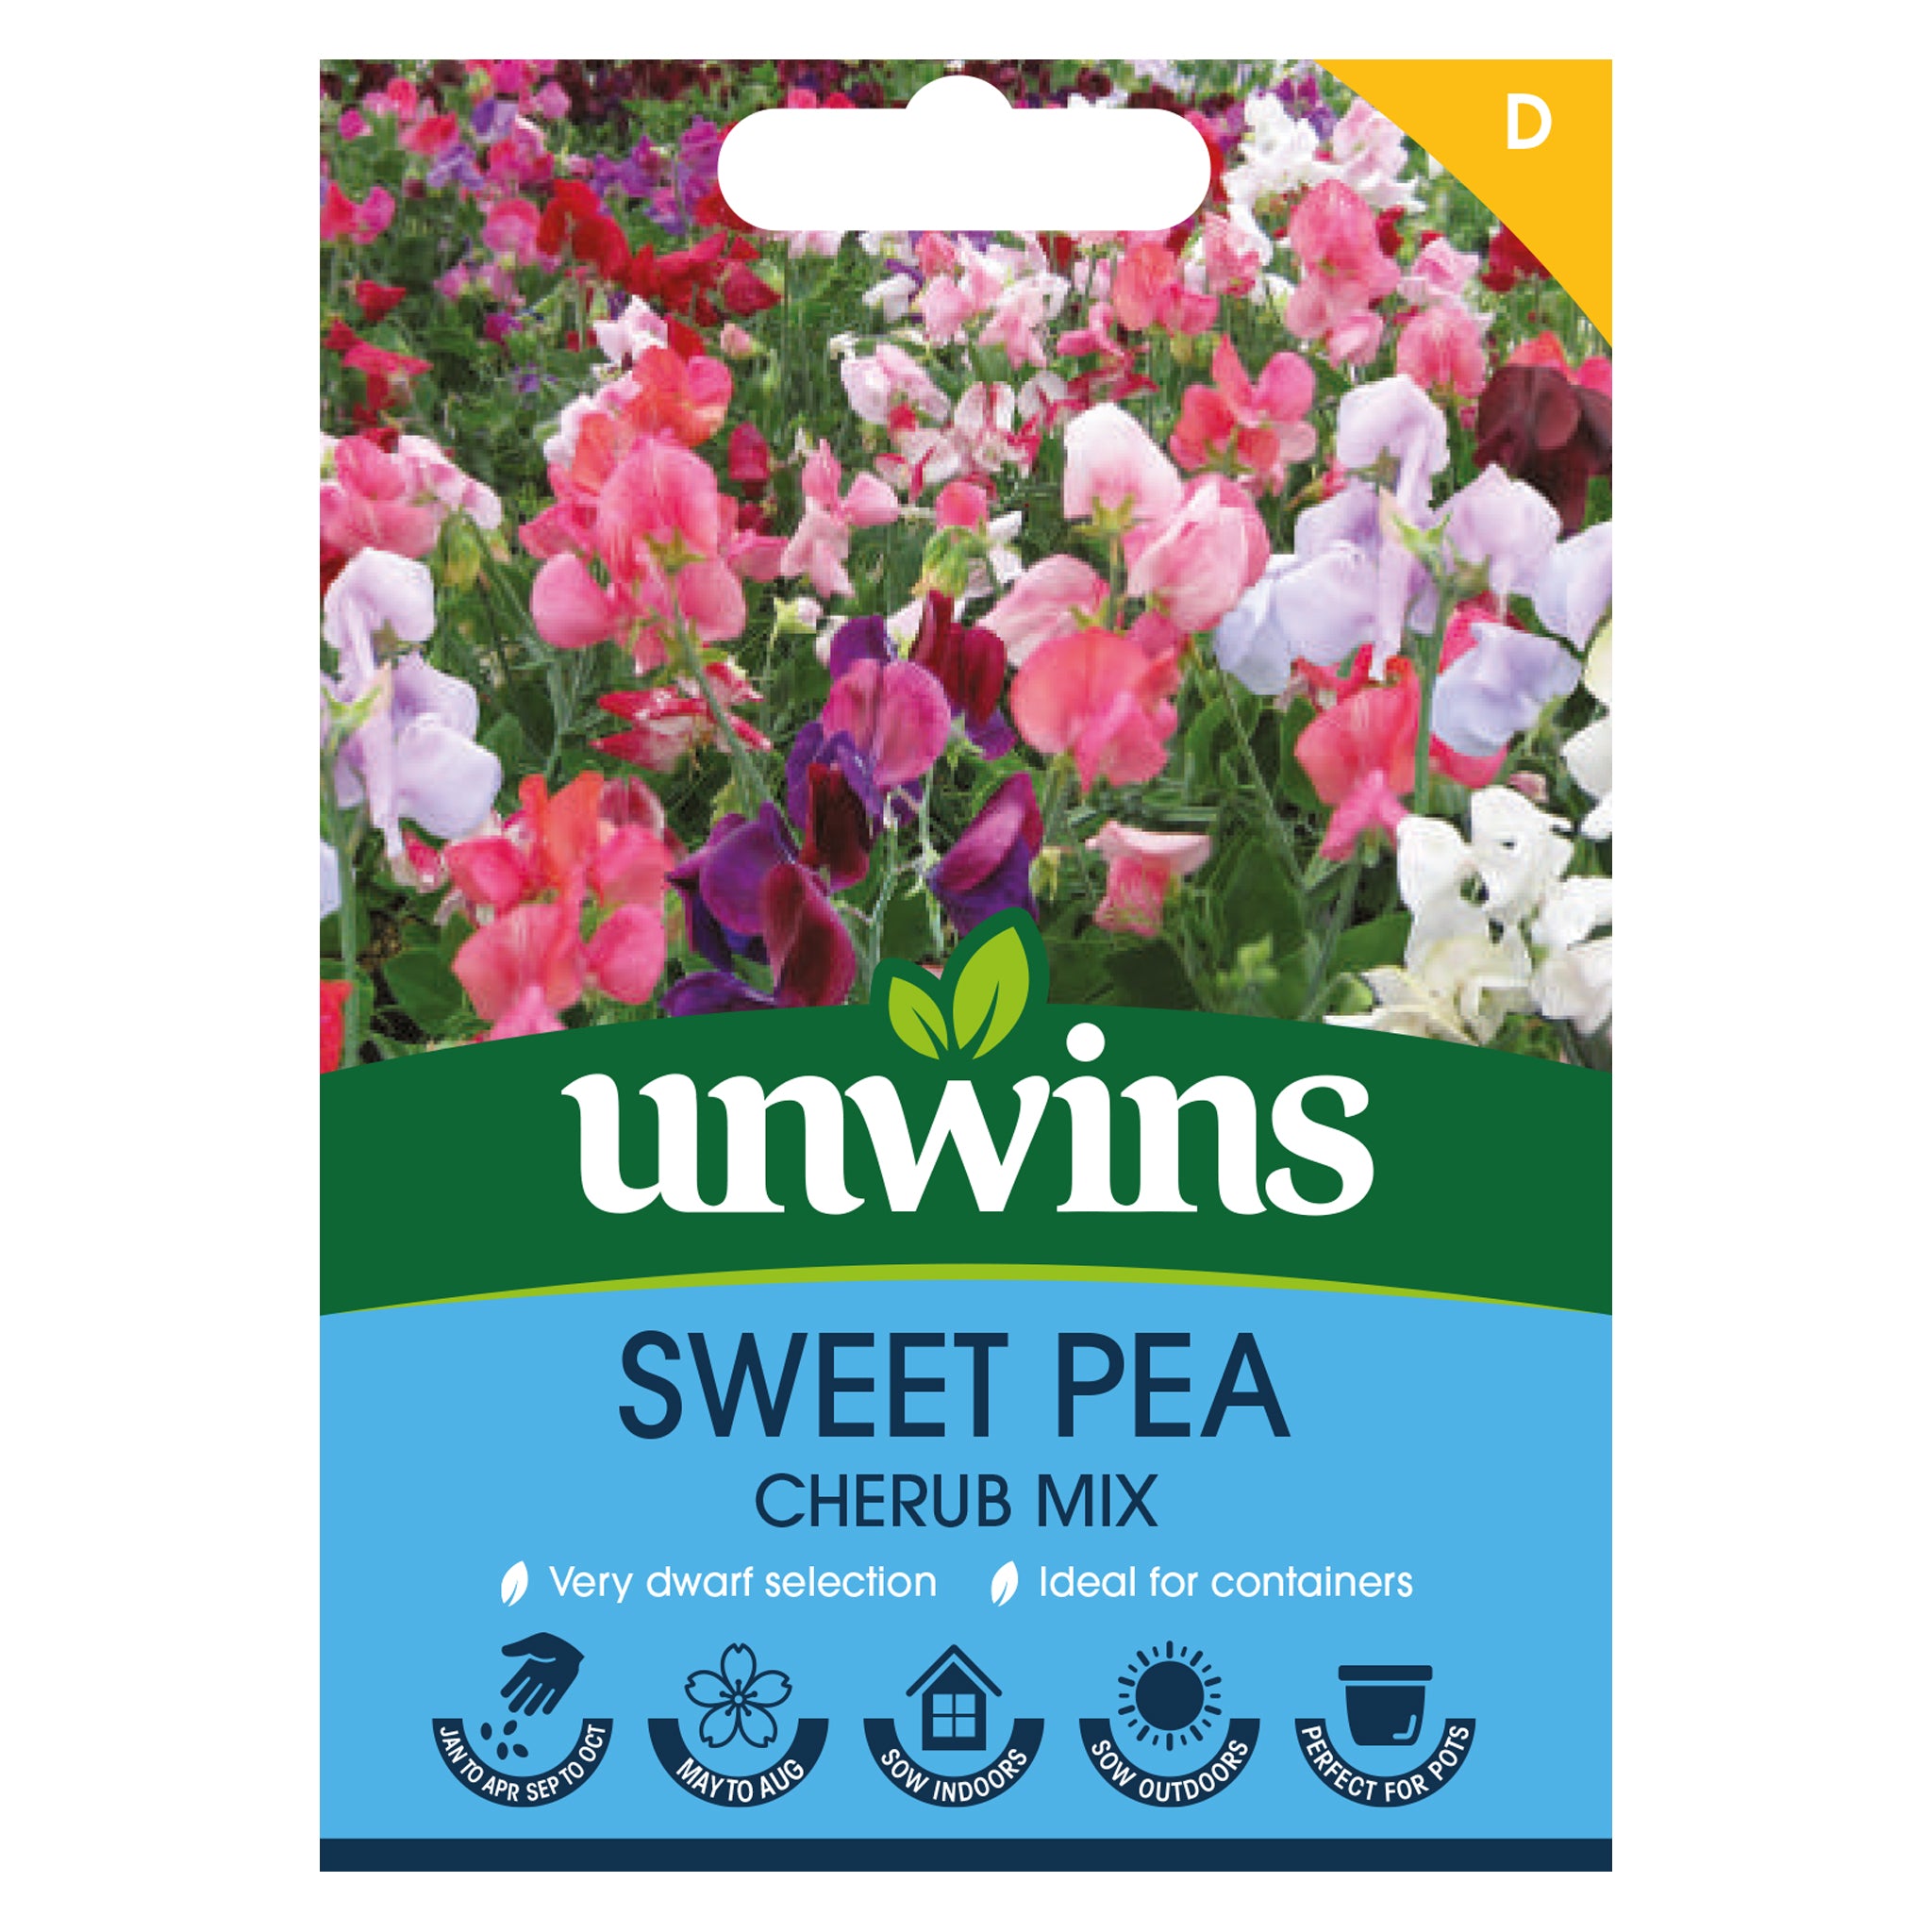 Unwins Sweet Pea Cherub Mix Seeds